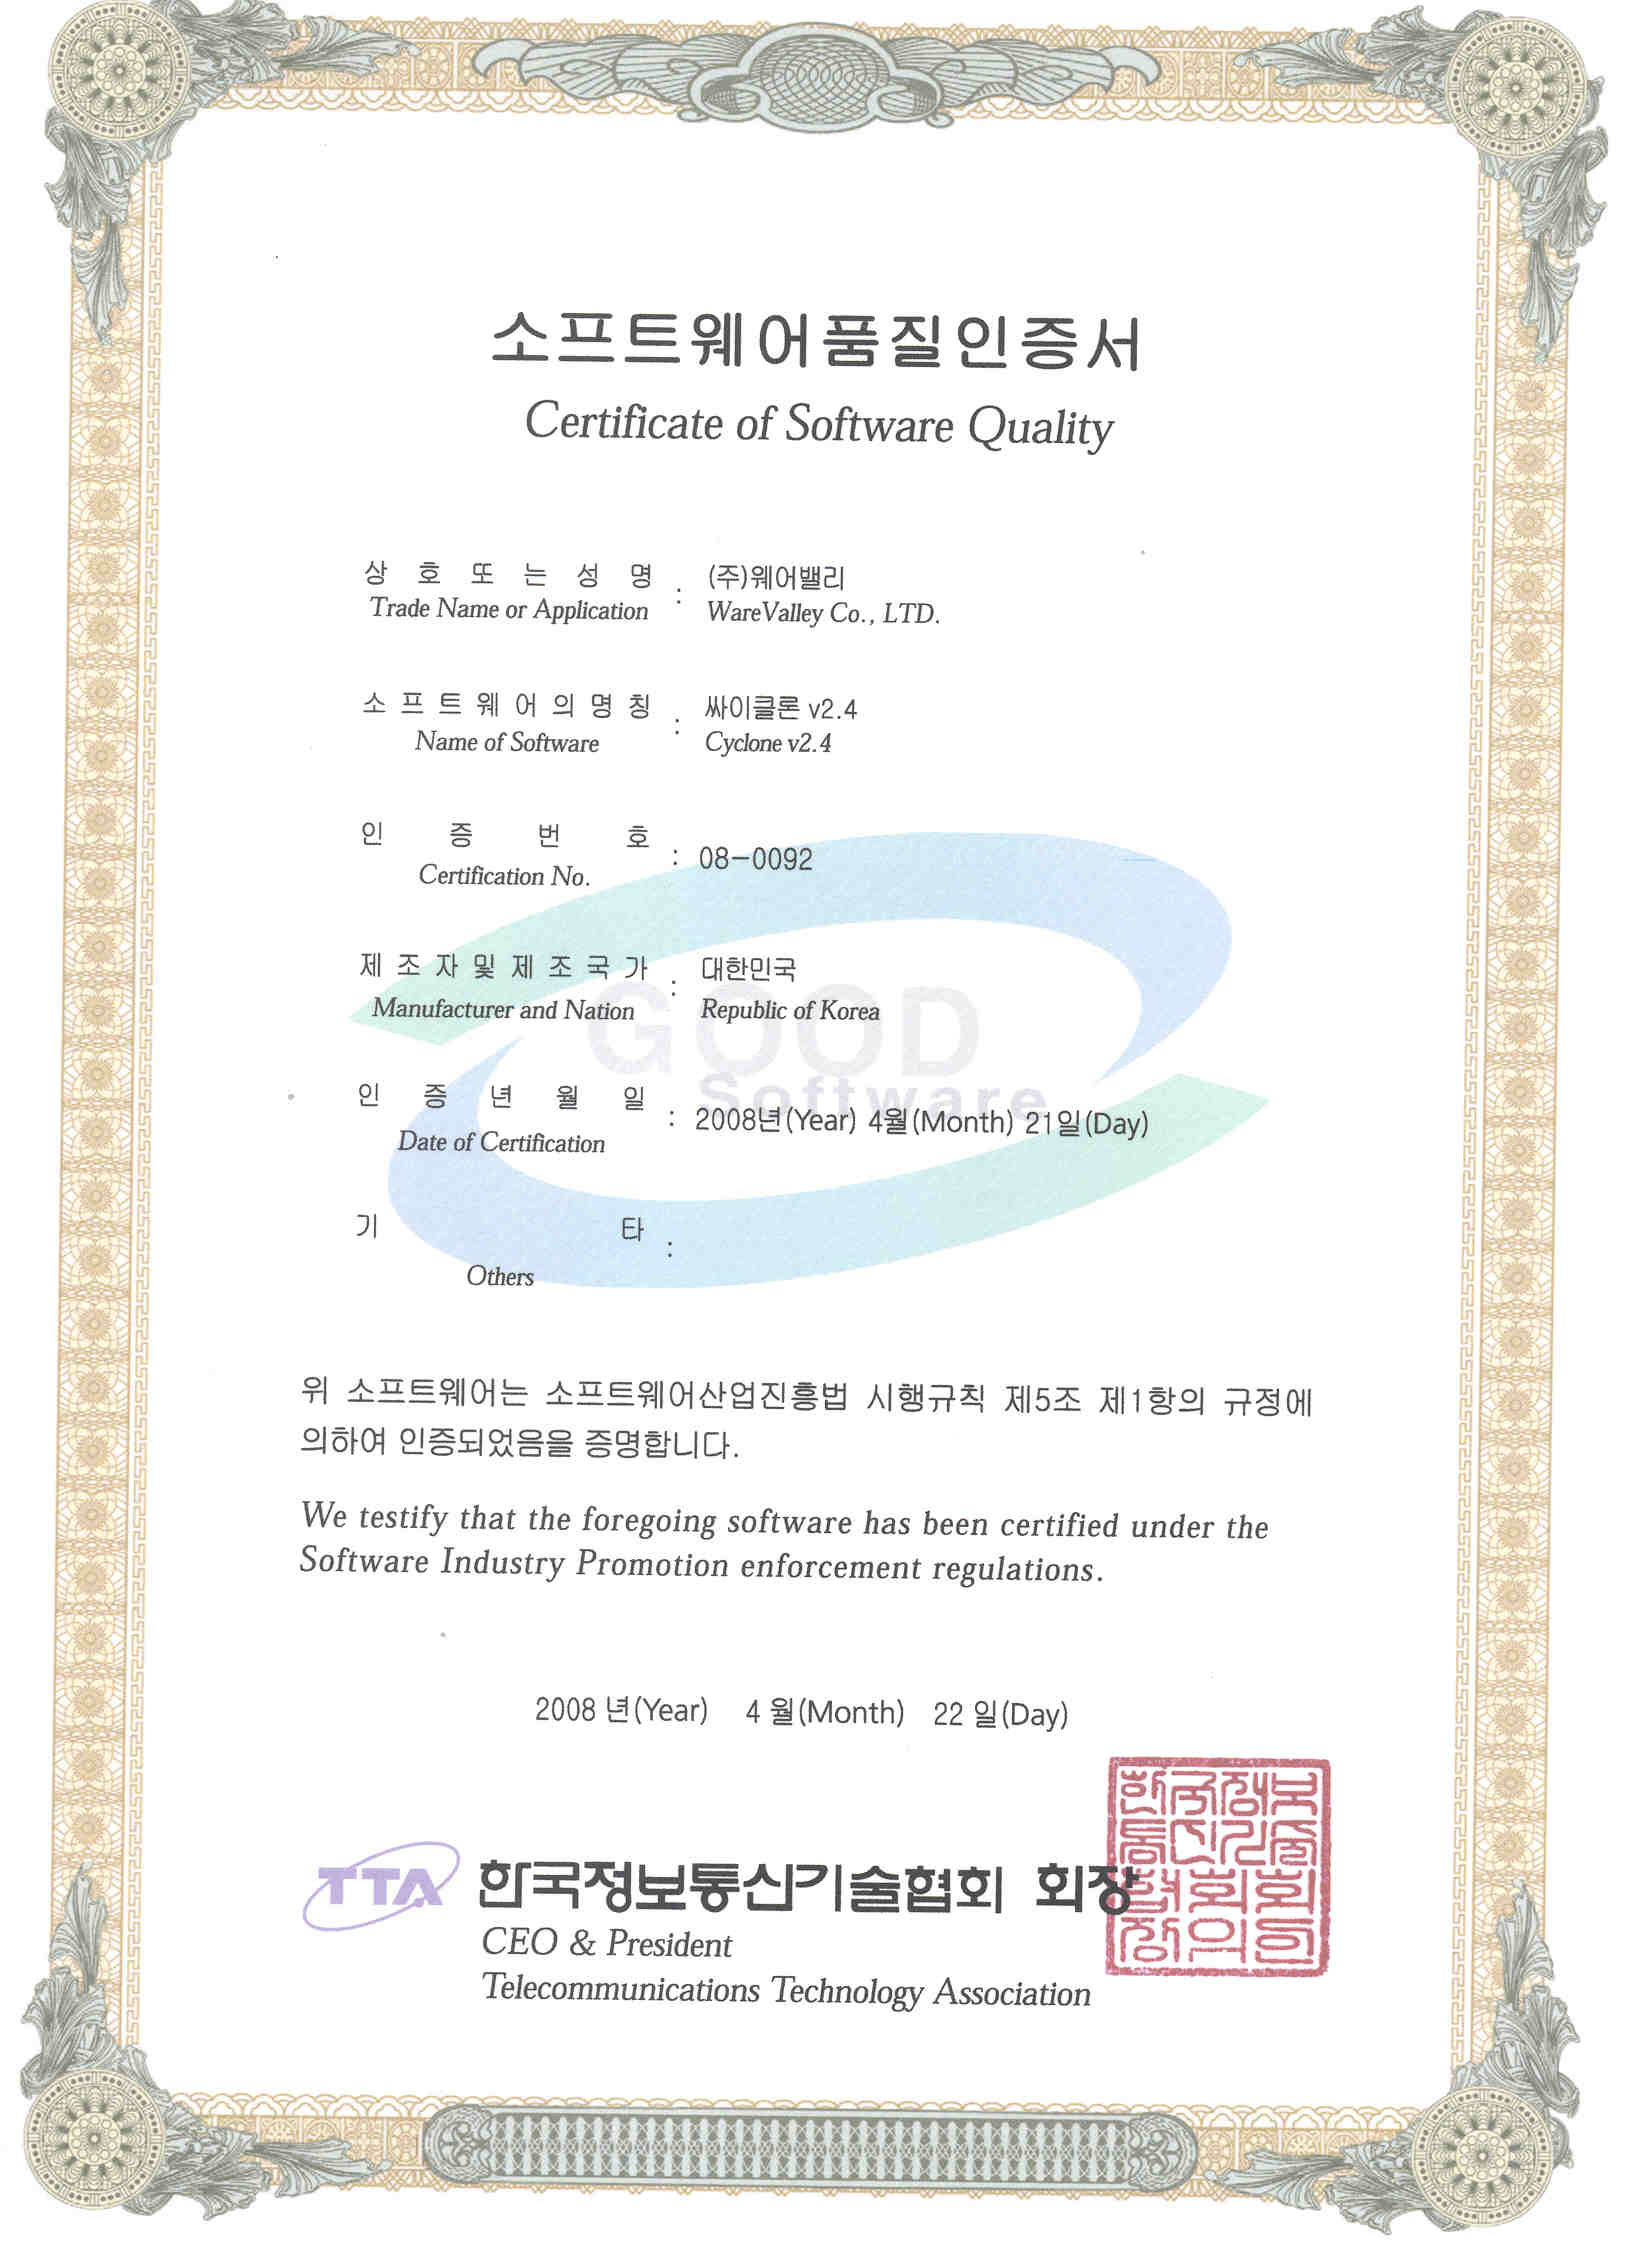 GS certification 08-0092